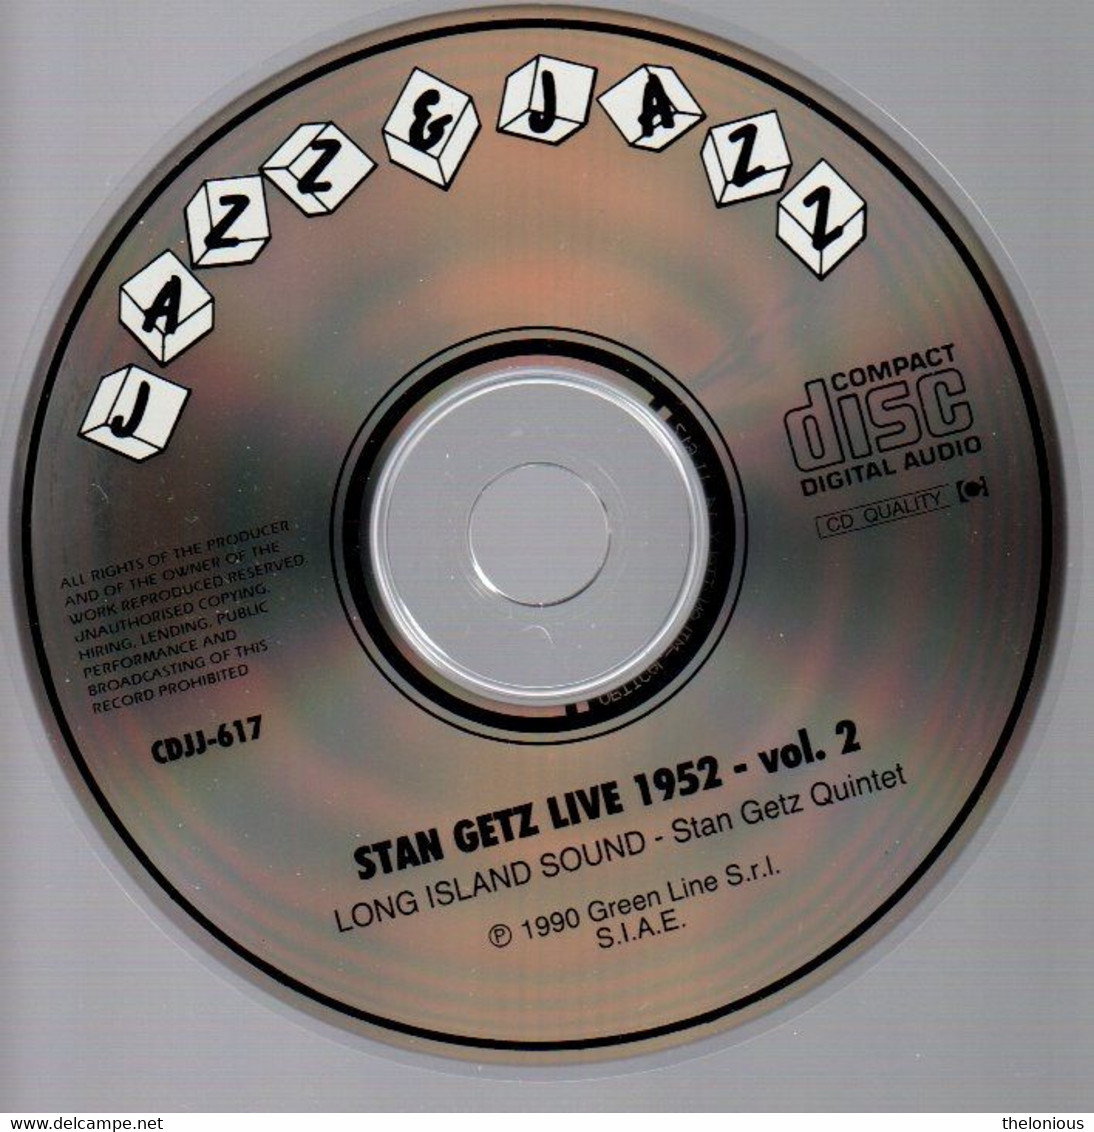 # CD: Stan Getz - Live 1952 - Volume 2 - Long Island Sound - CDJJ 617 - Jazz